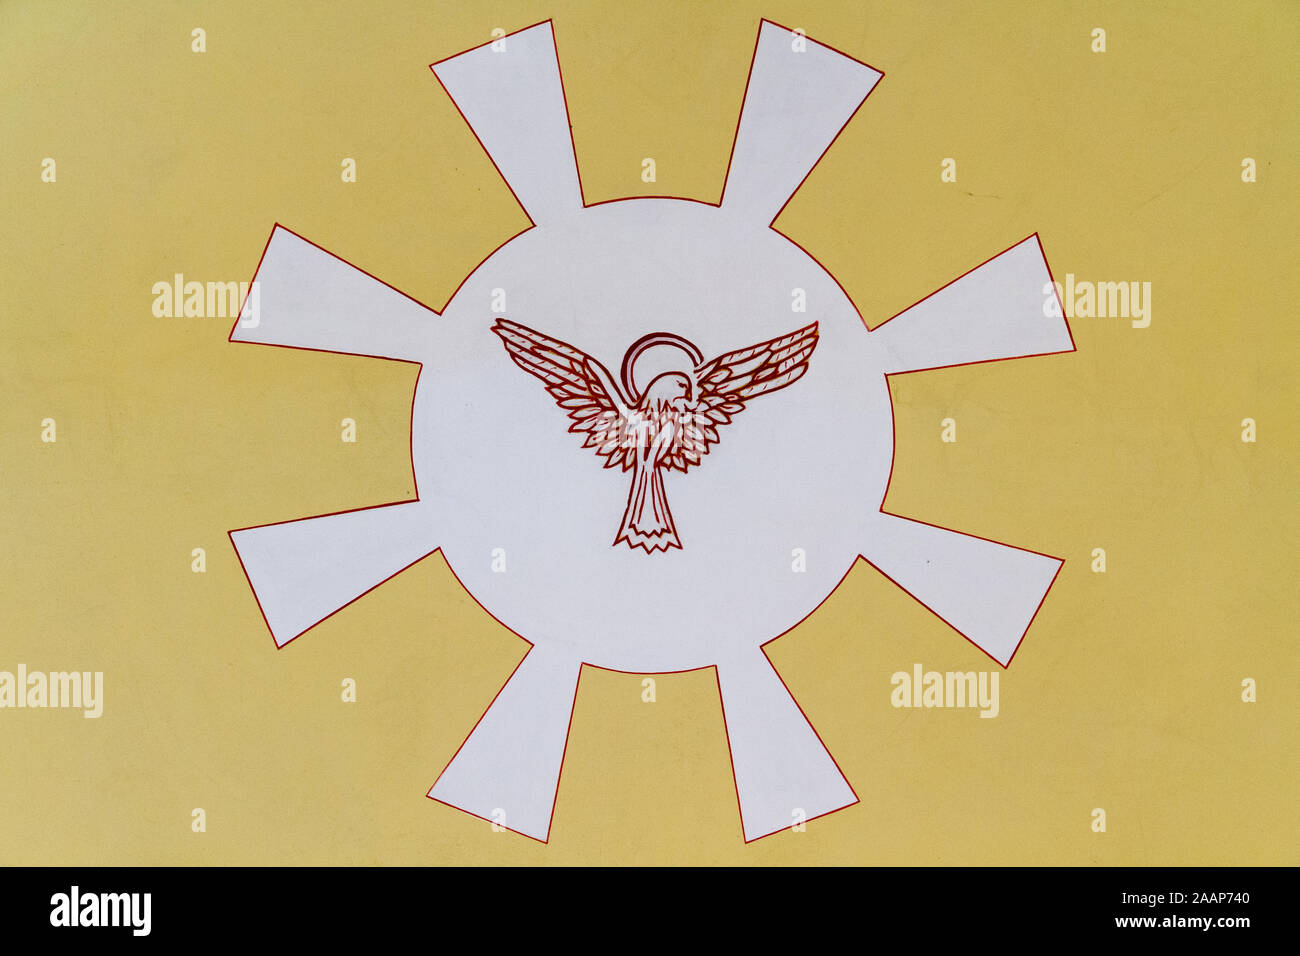 Pintura del Espíritu Santo como una paloma en el techo. Iglesia católica romana de Santa Ana. Foto de stock